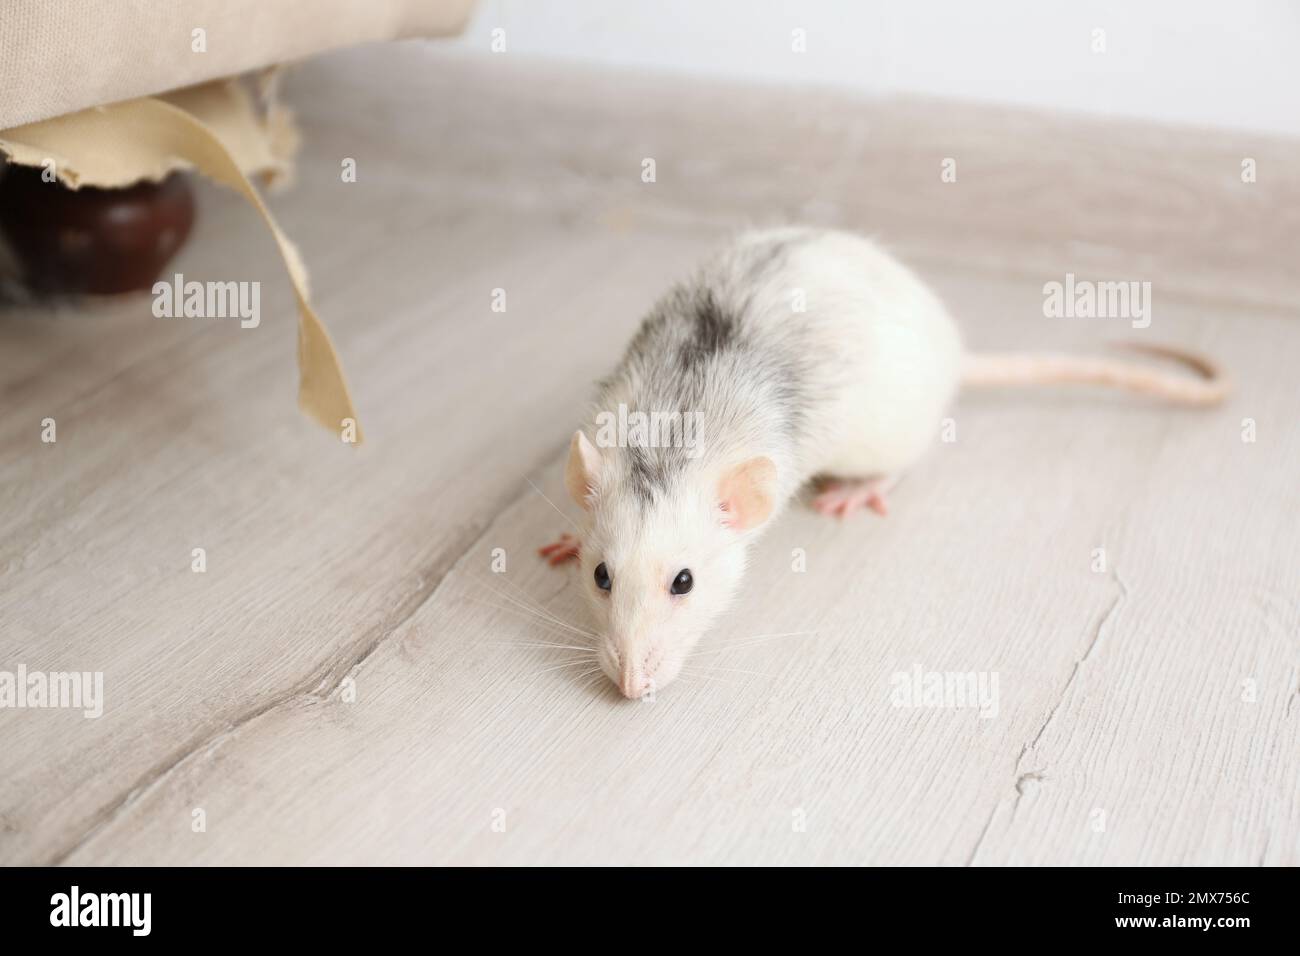 Rat near damaged furniture indoors. Pest control Stock Photo